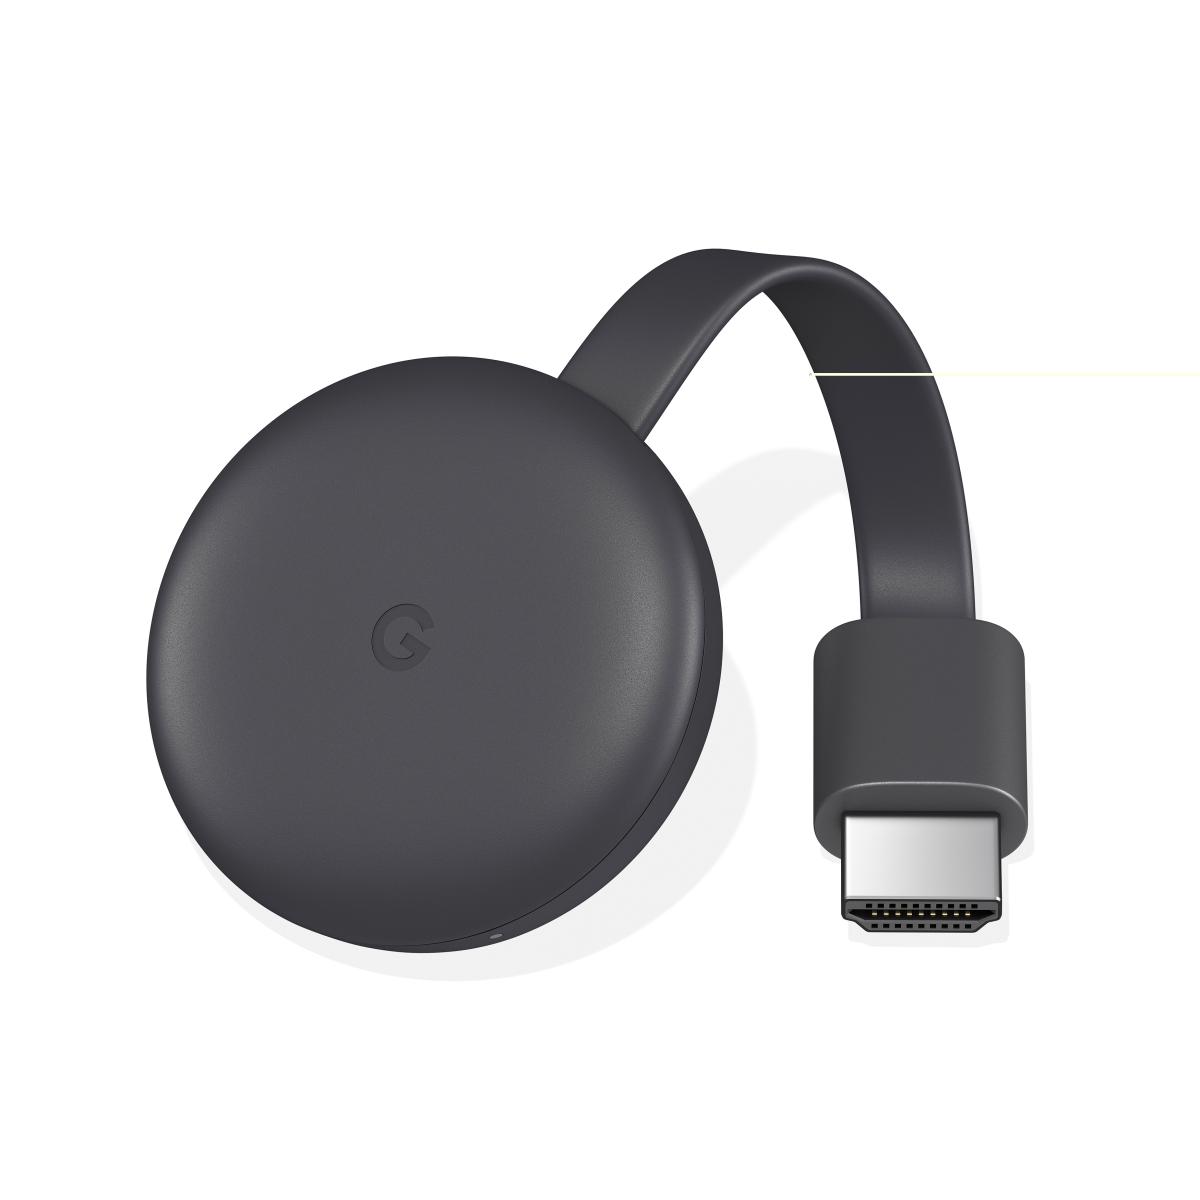 Google Chromecast ビデオストリーミングデバイス GA00439-JP